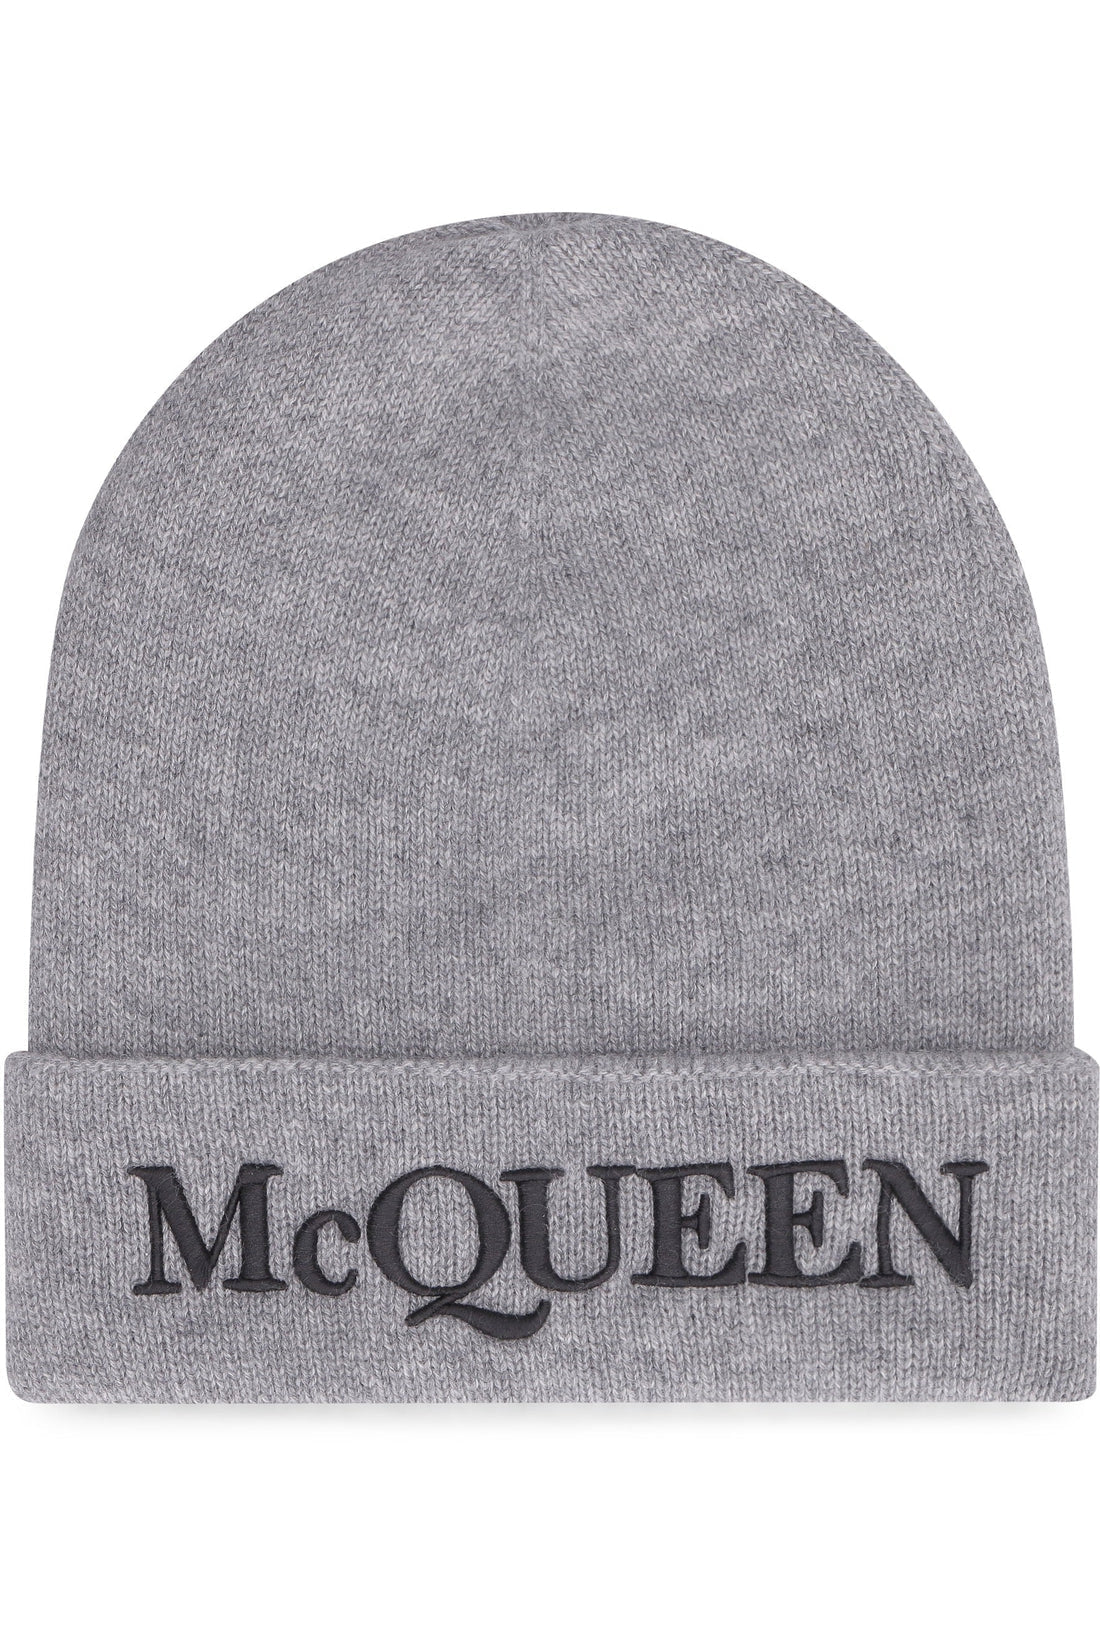 Alexander McQueen-OUTLET-SALE-Knitted beanie hat-ARCHIVIST